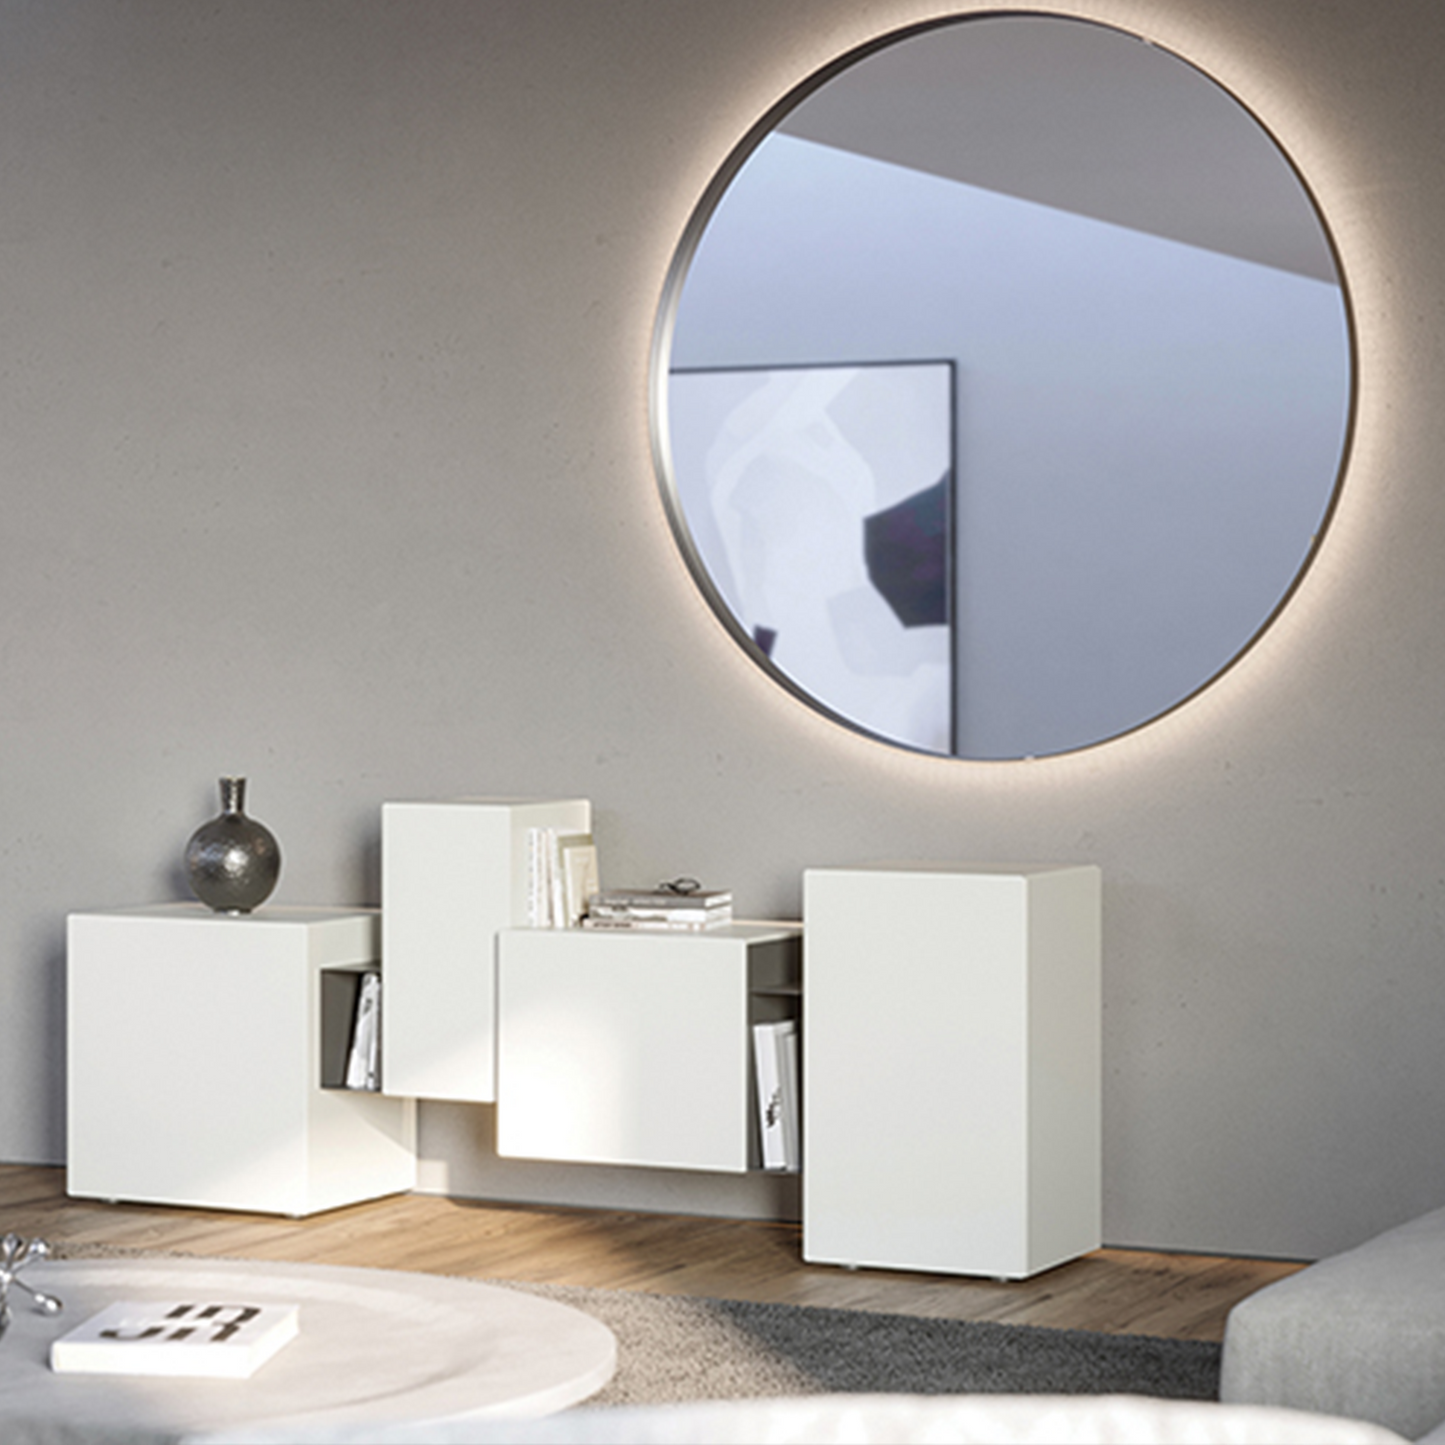 Circular wall mirror with LED backlight.